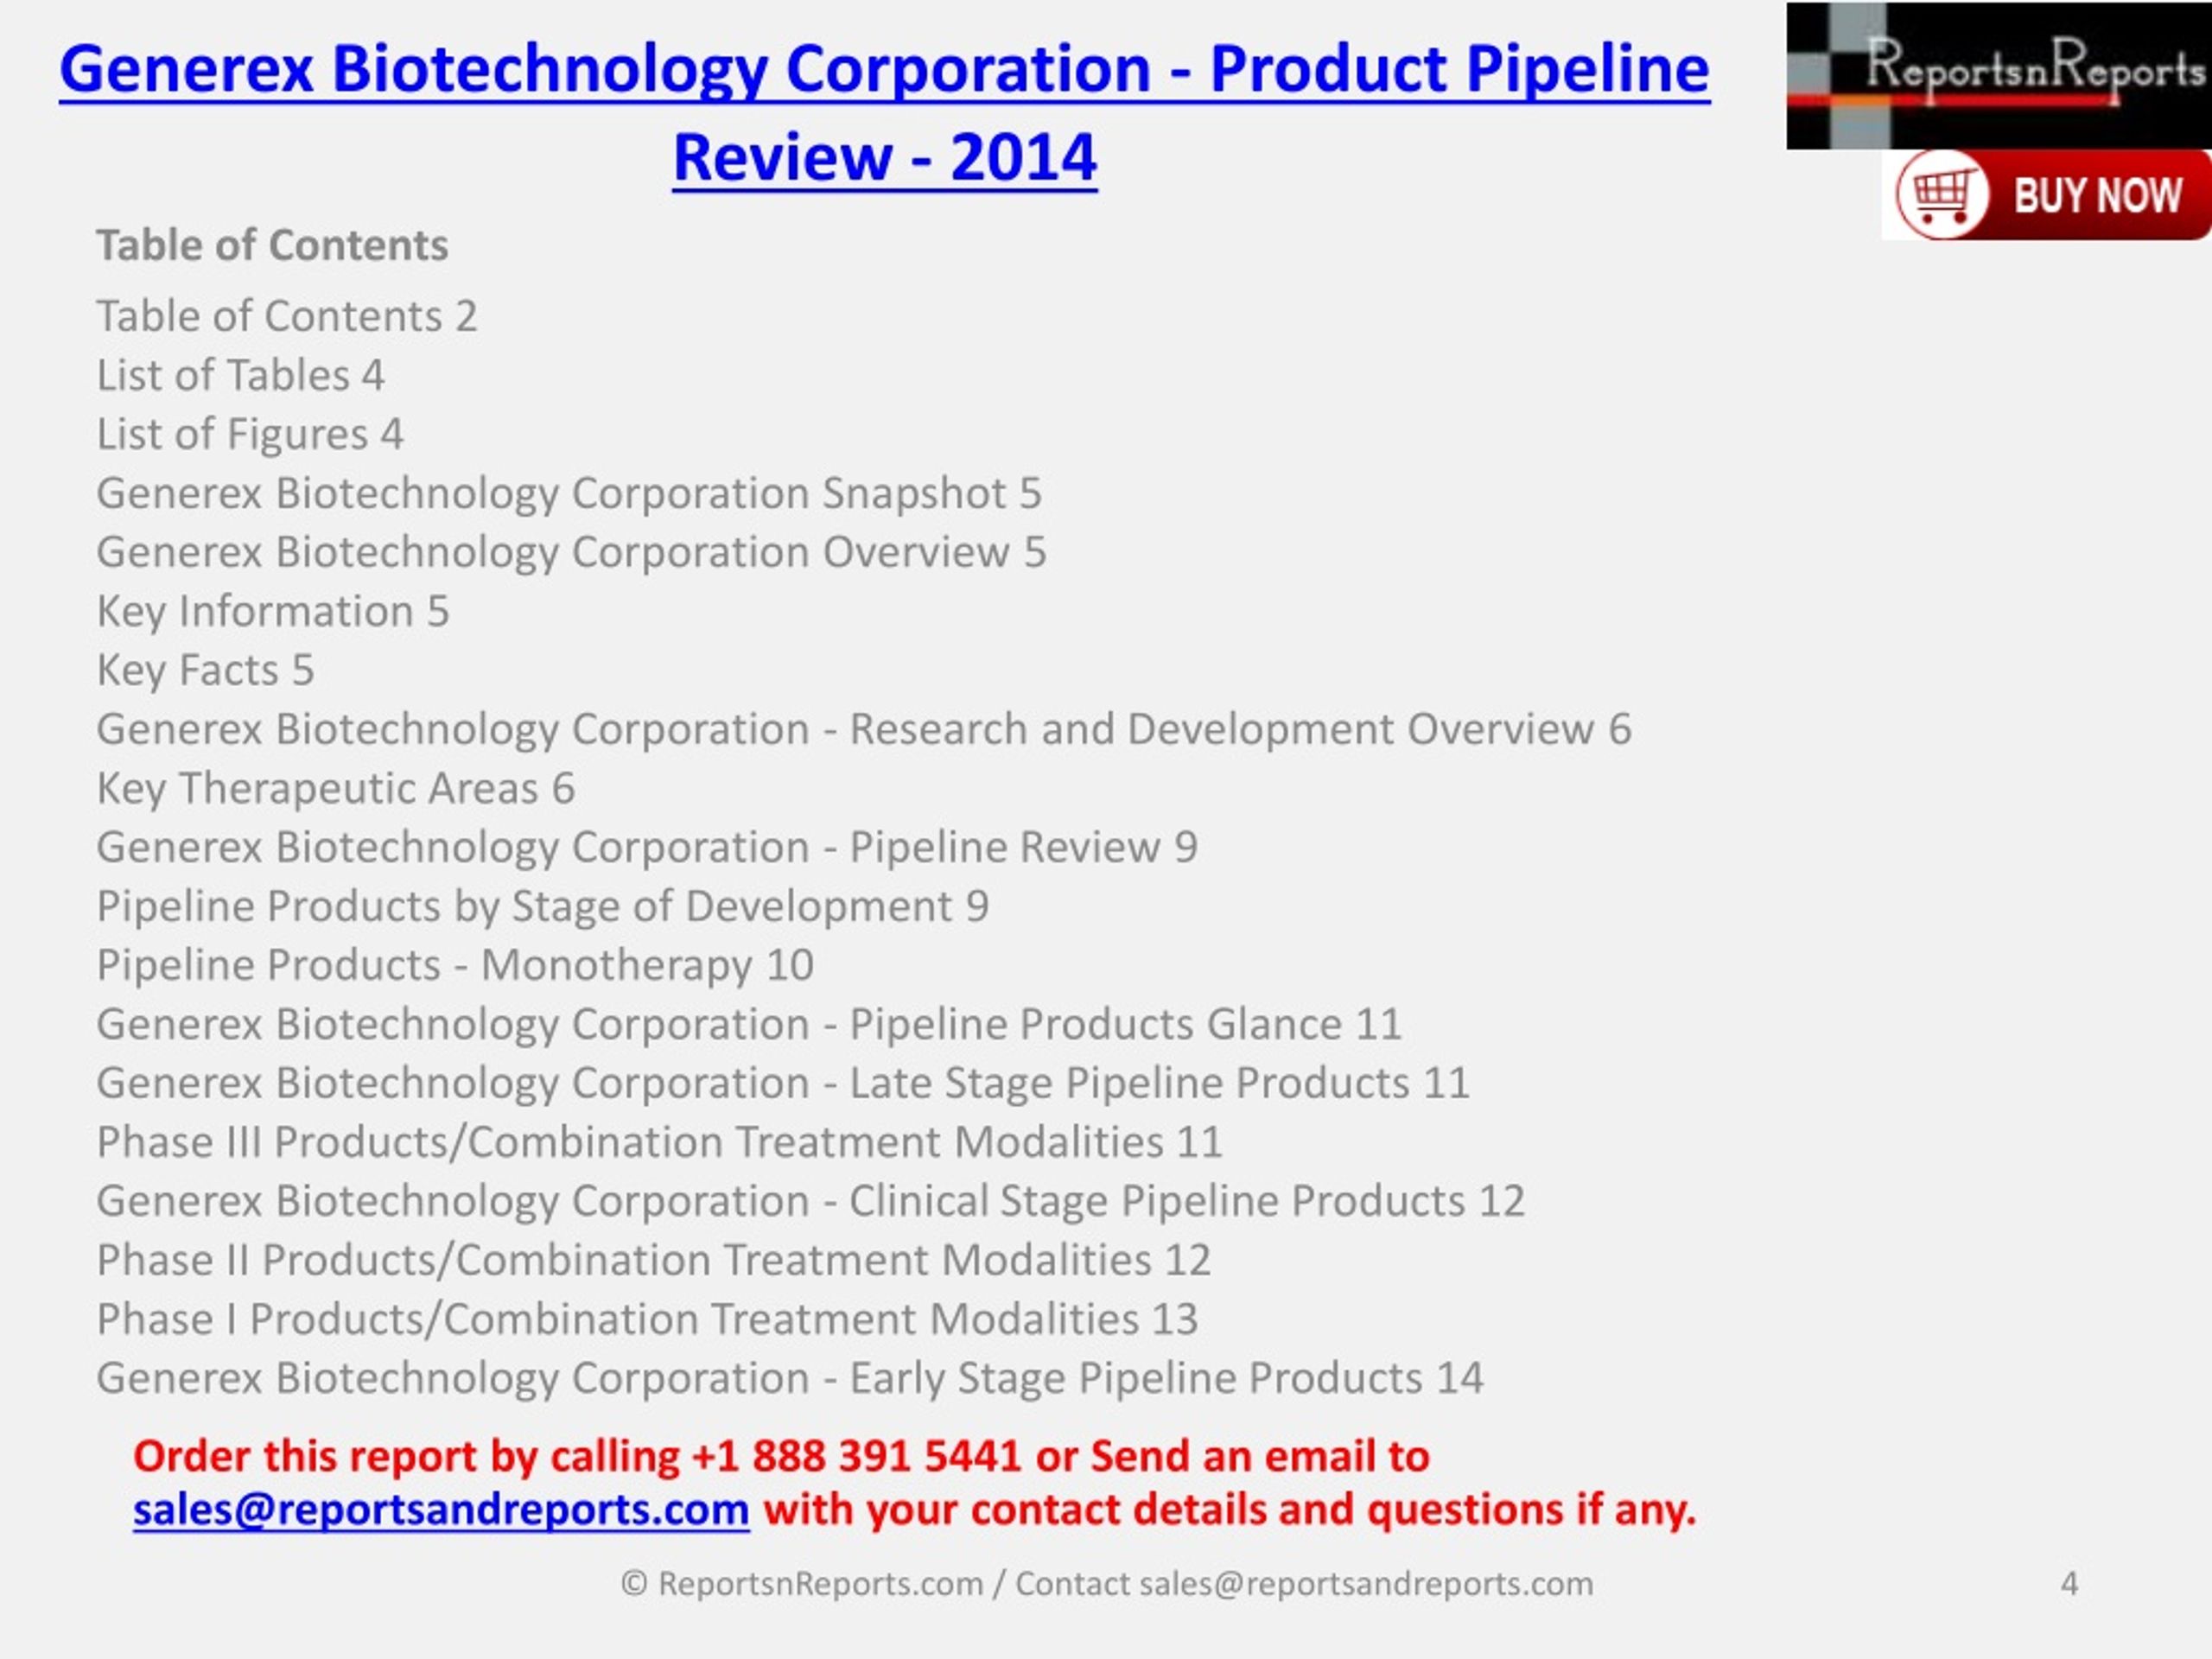 PPT Generex Biotechnology Corporation Market Overview 2014